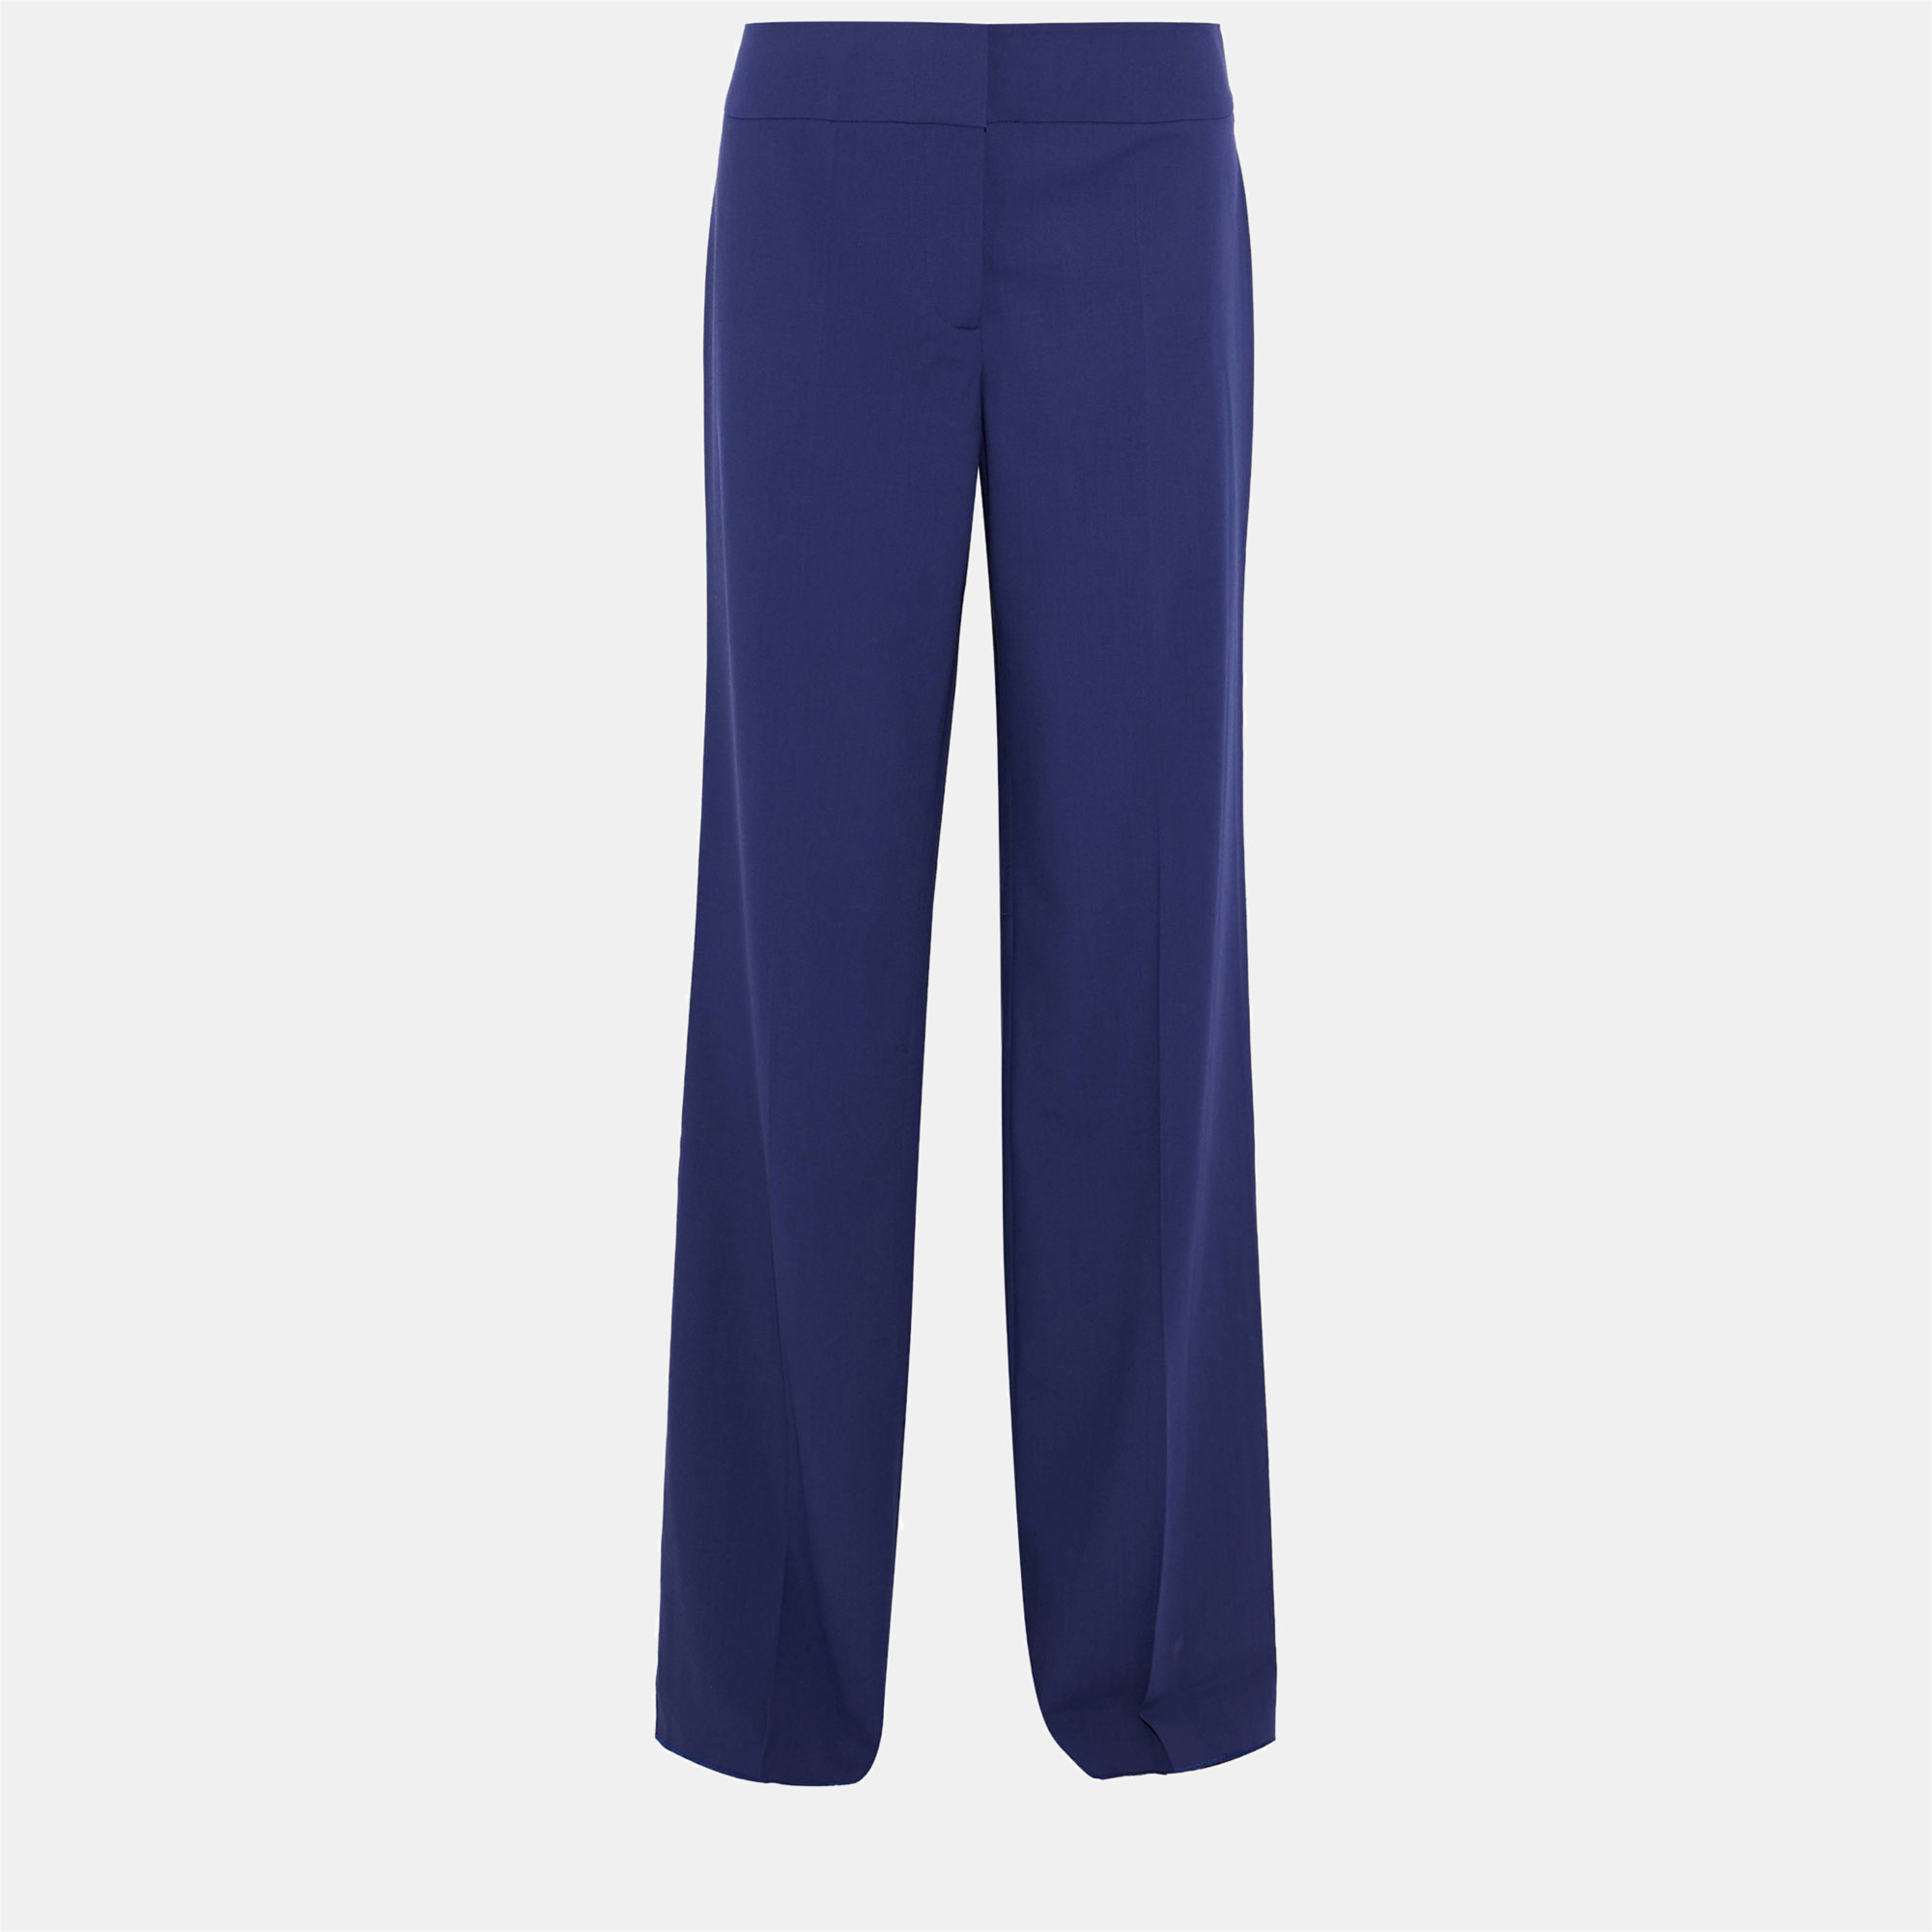 Giorgio armani blue wool wide-leg pants m (it 42)